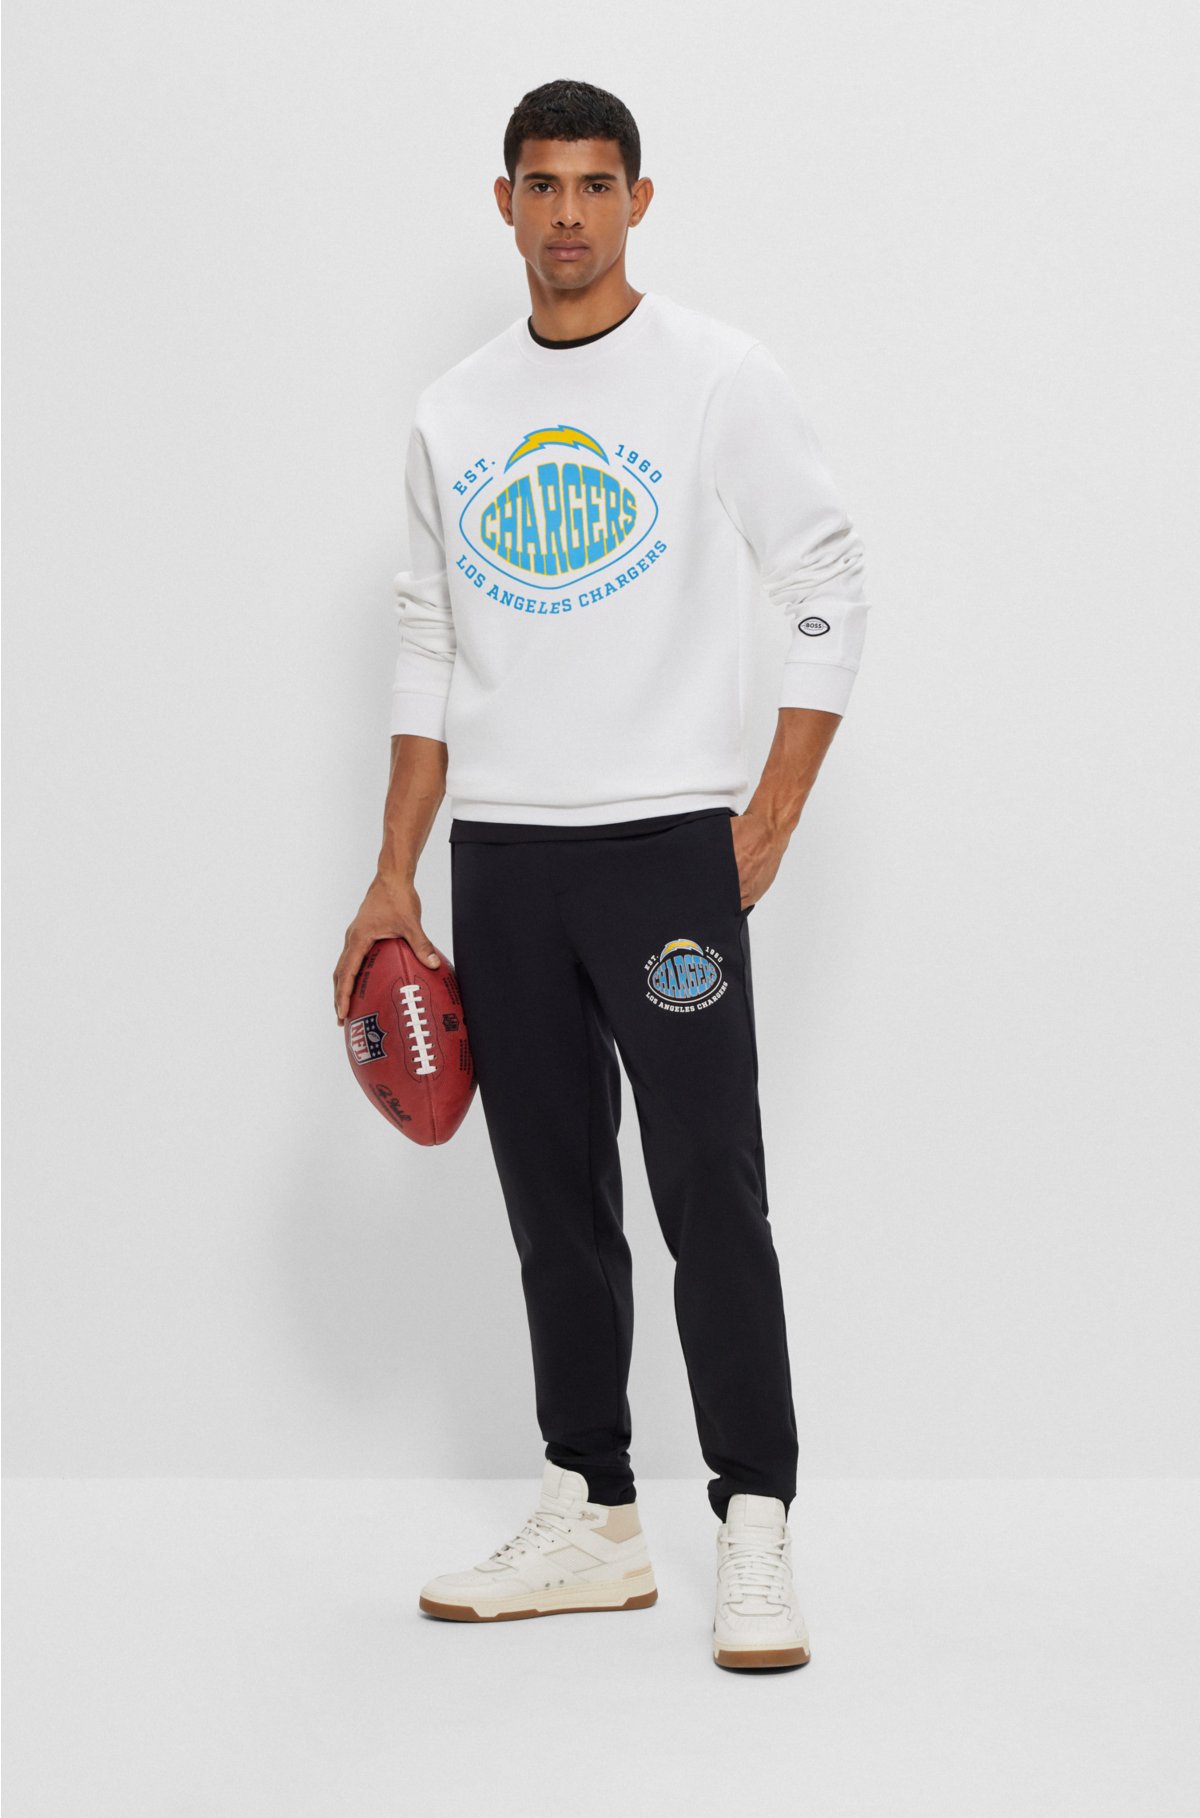 Los Angeles Chargers Nike NFL On Field Apparel Sweatshirt Men'